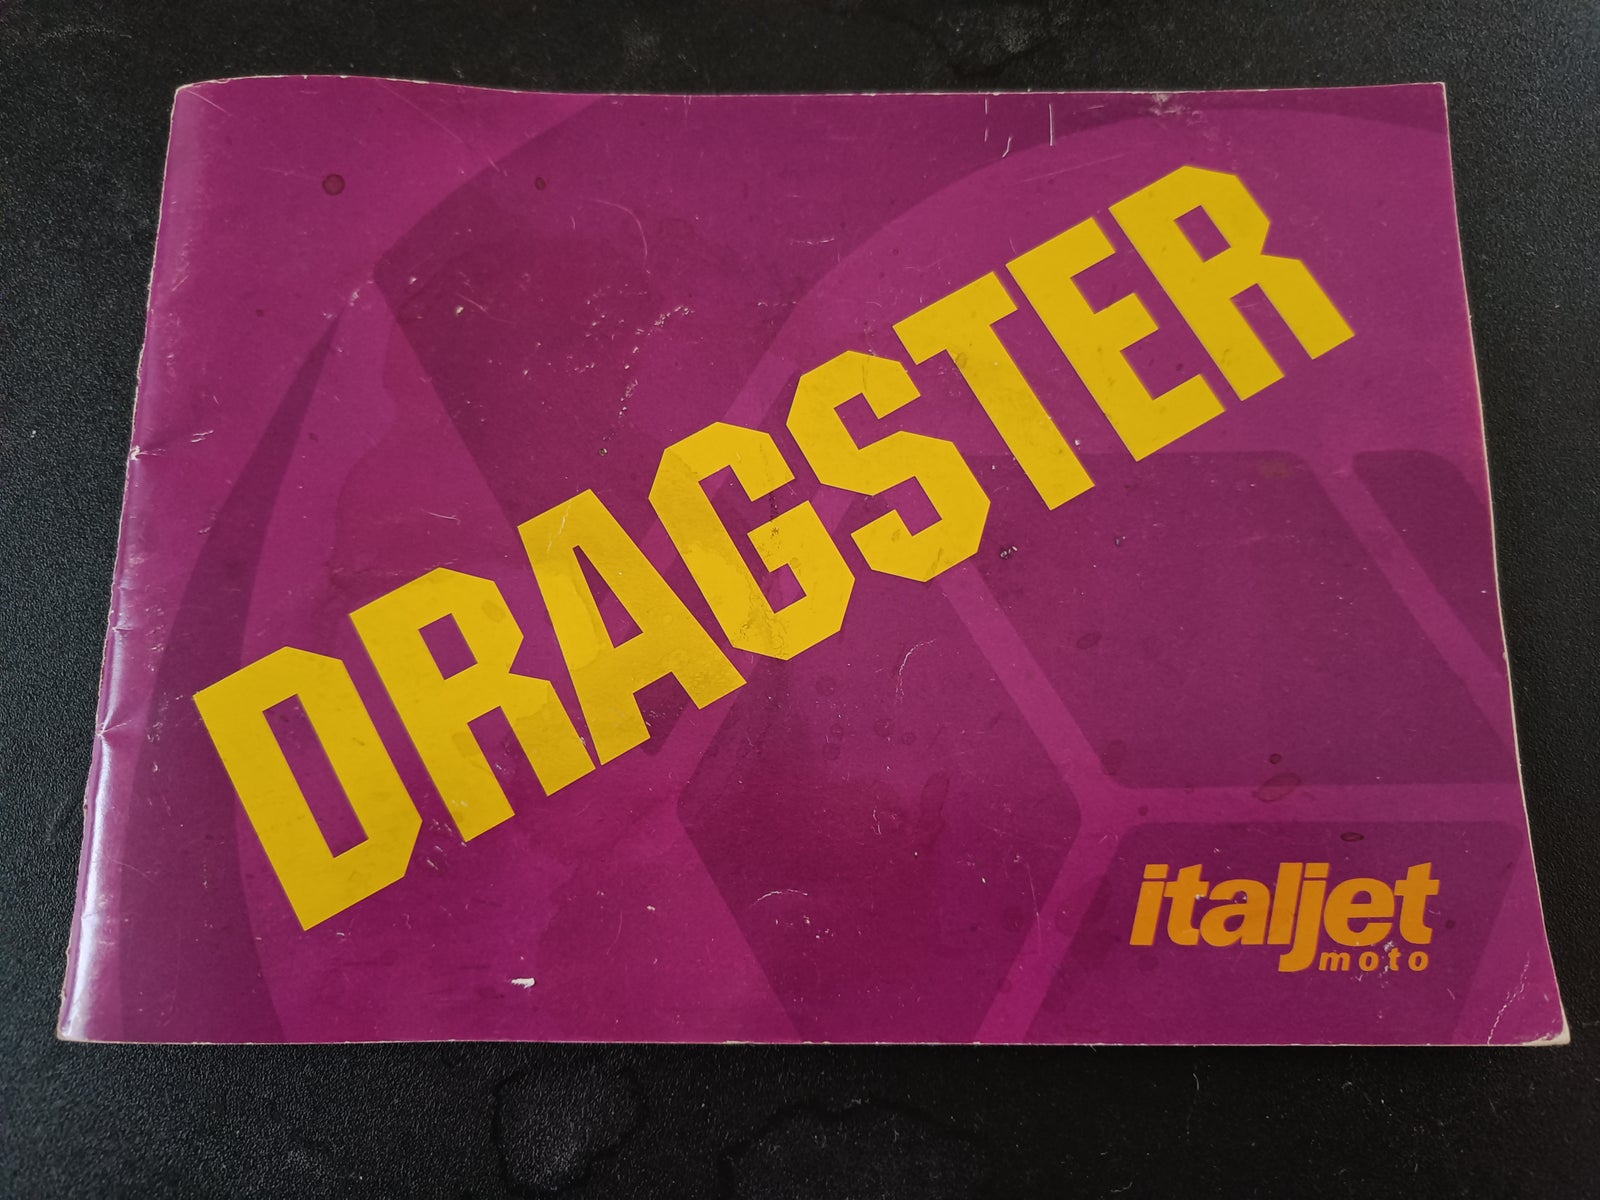 Italjet Dragster, 1998